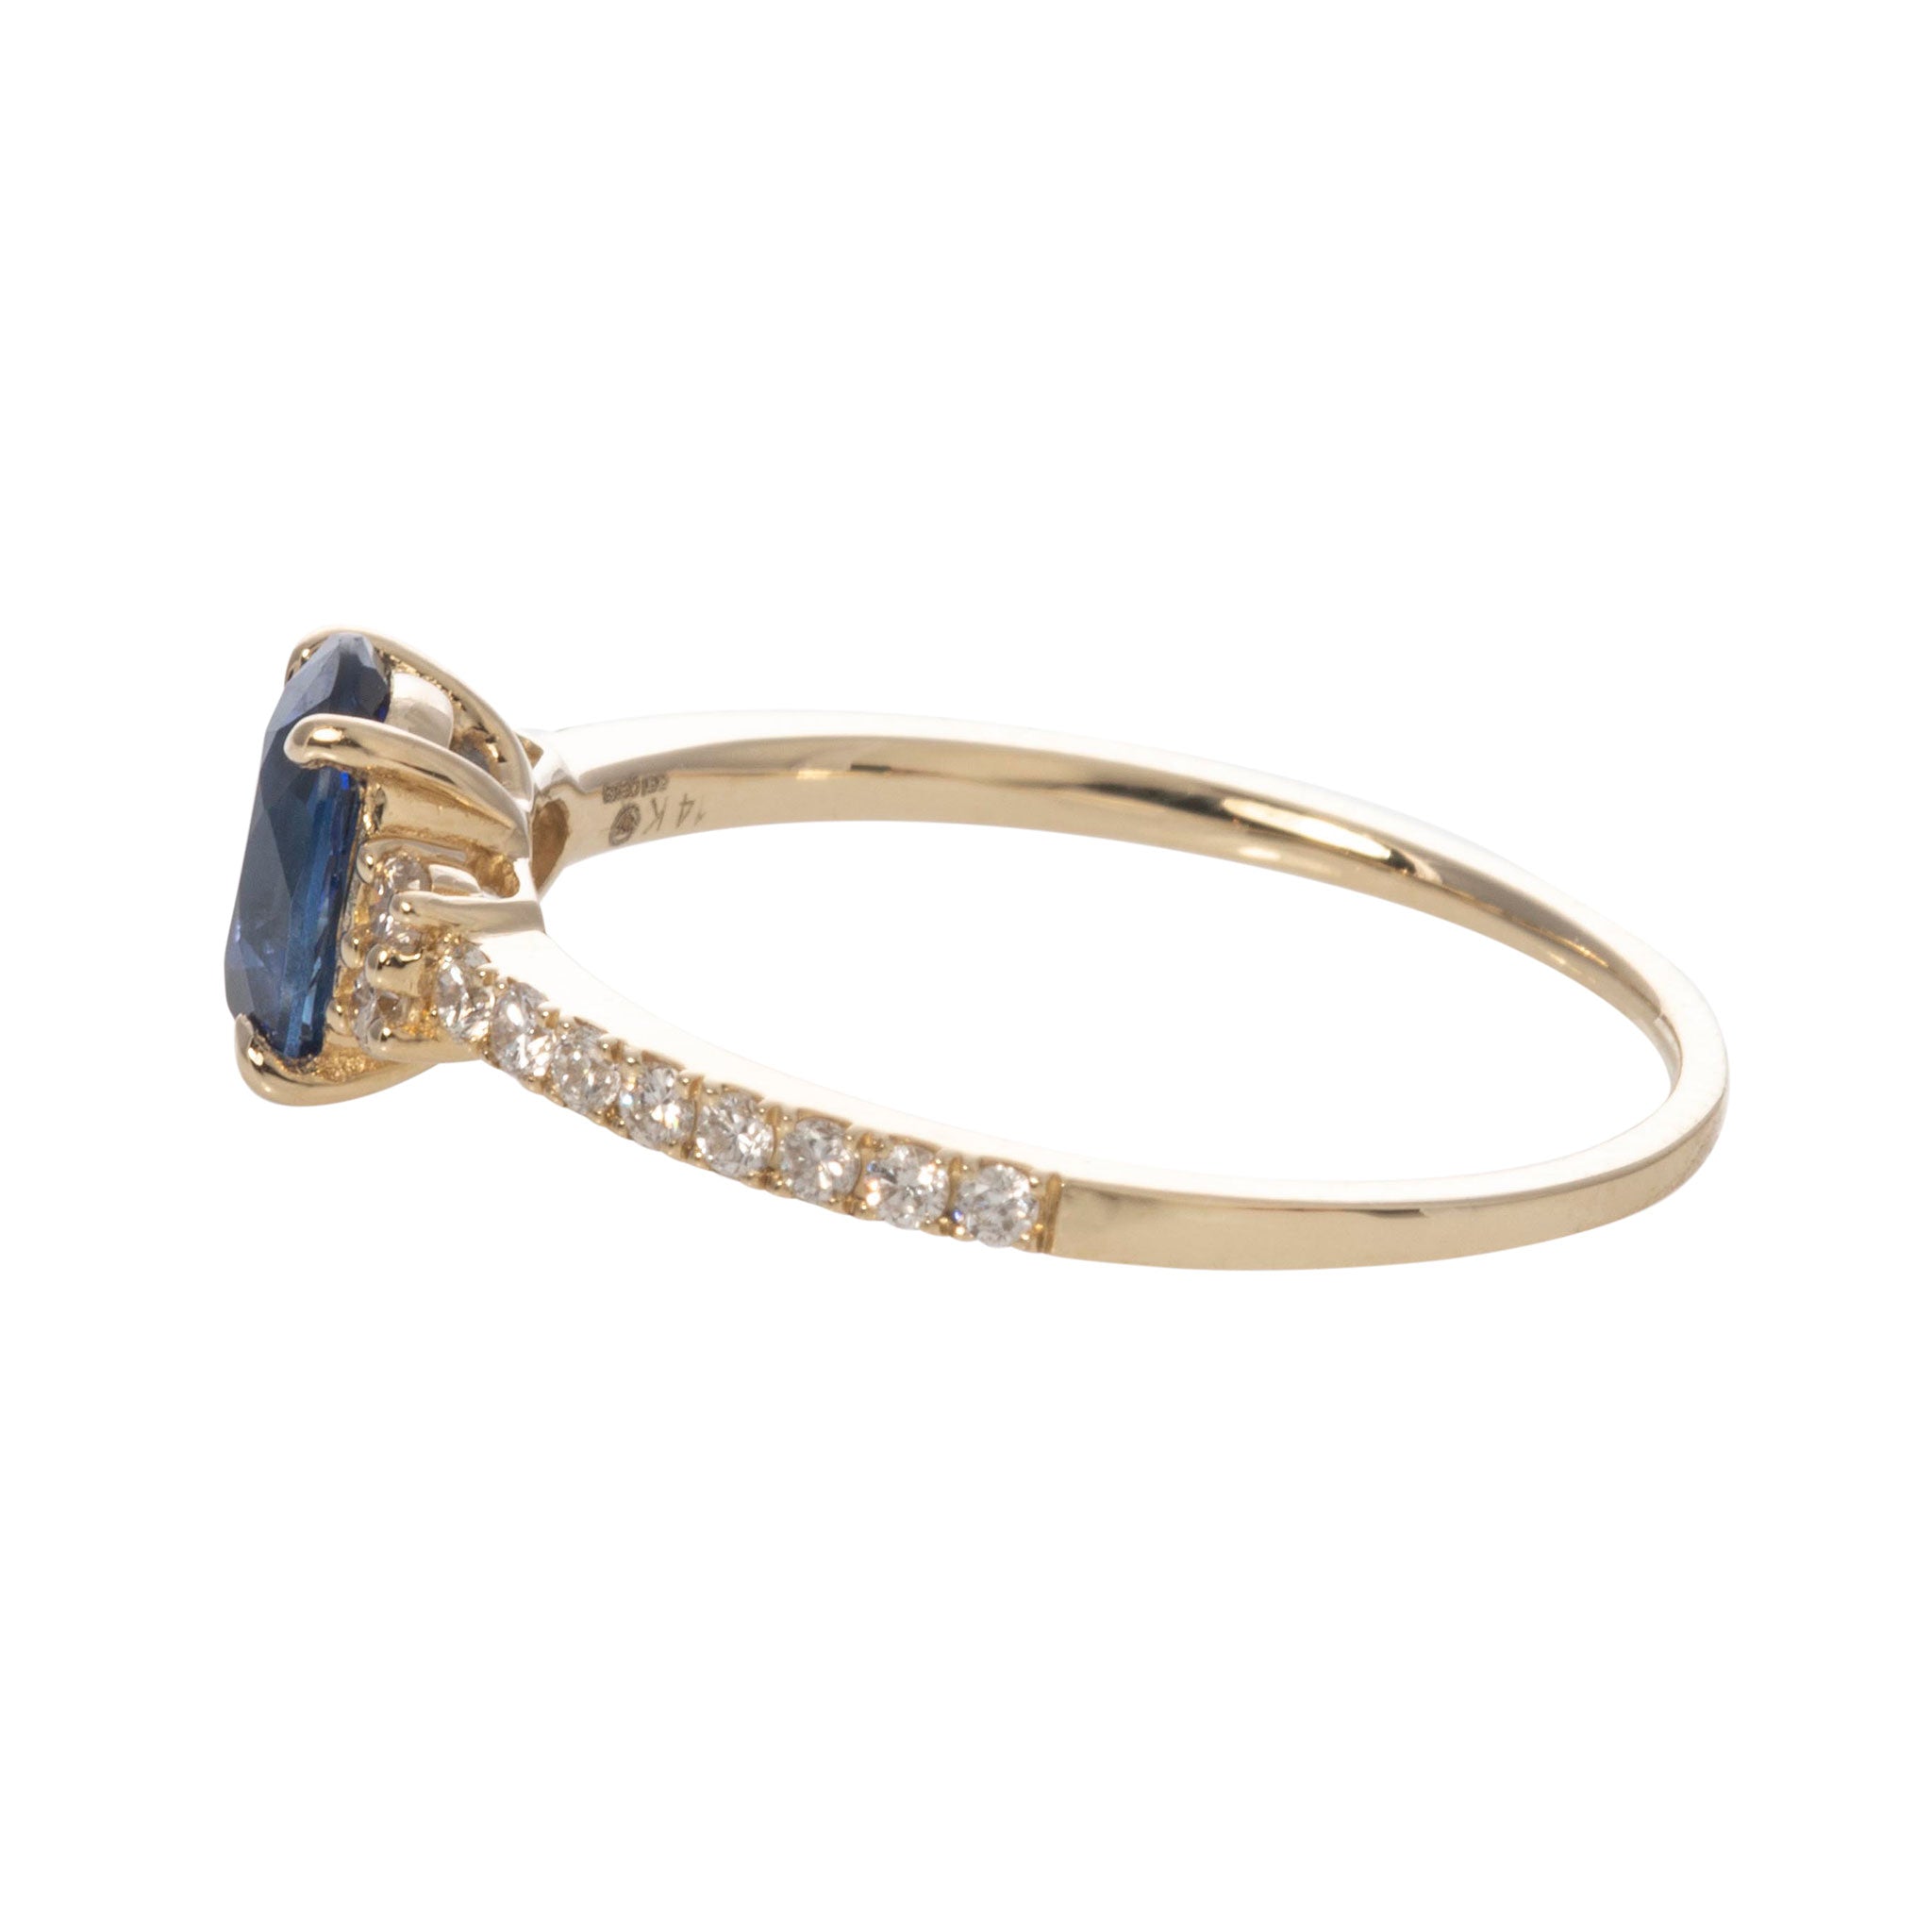 Oval Sapphire & Diamond 14K Yellow Gold Ring